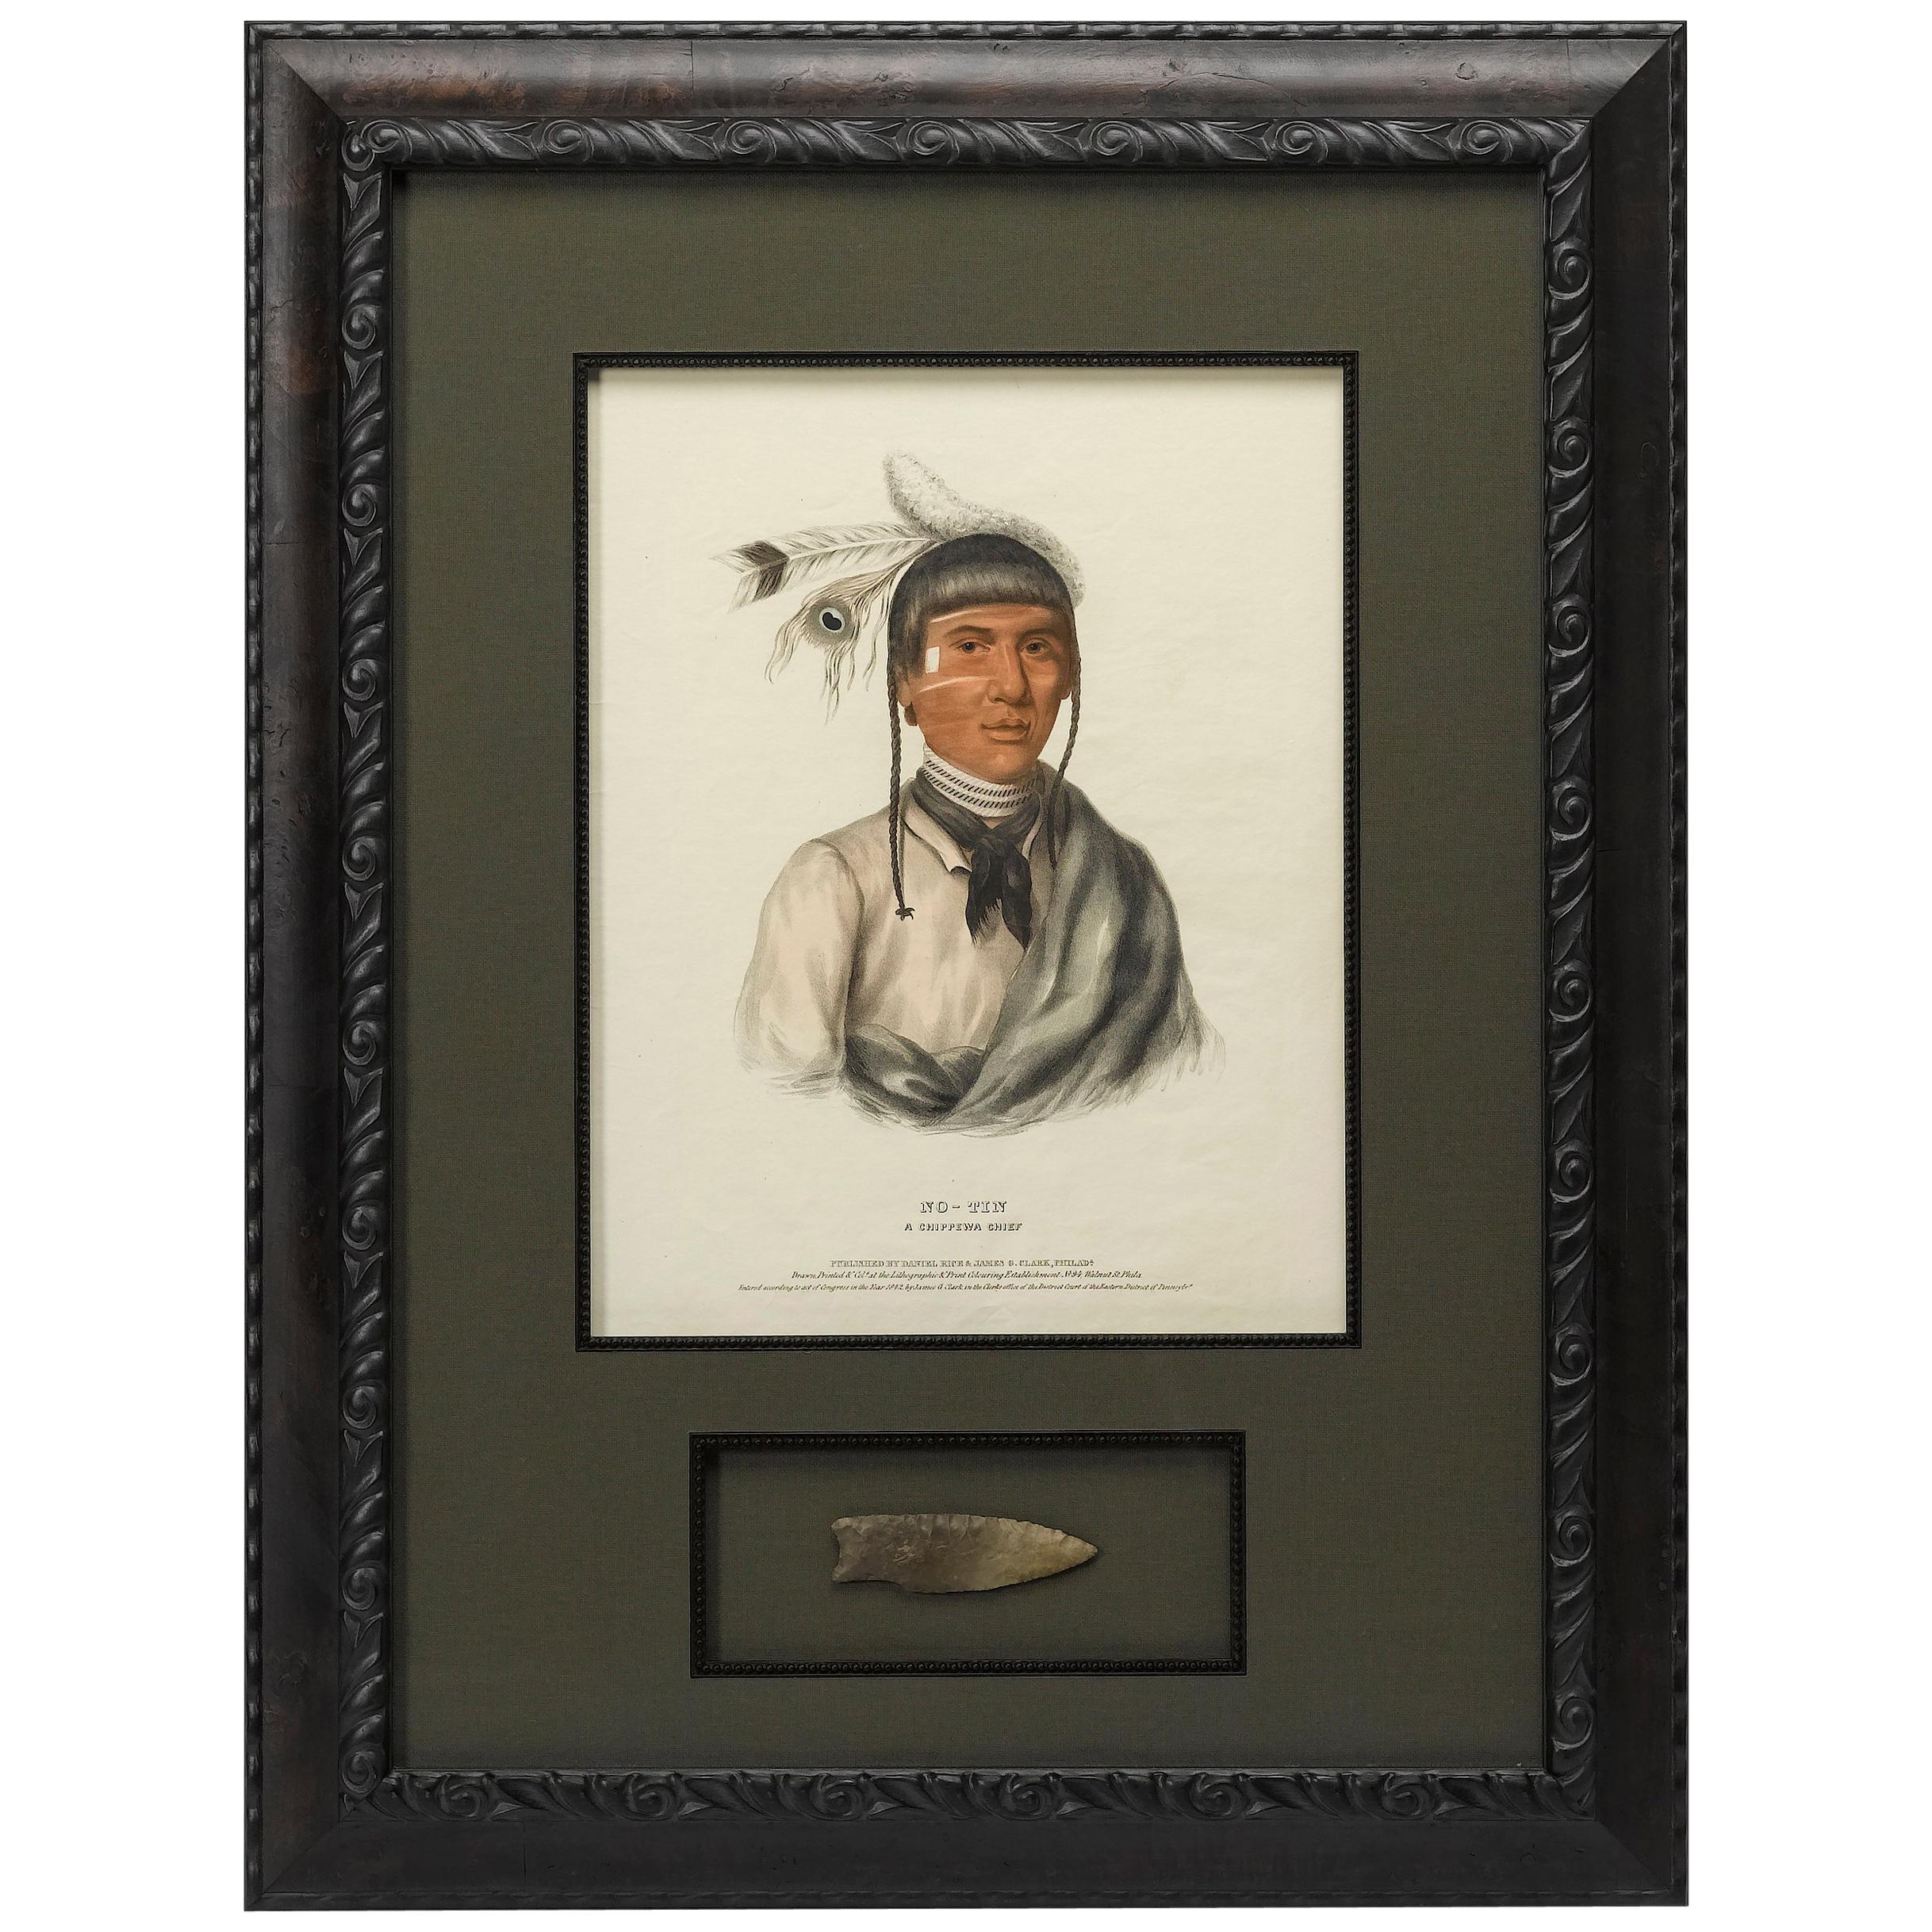 No-Tin, A Chippewa Chief Hand-Colored Lithograph and Antique Arrowhe, circa 1838